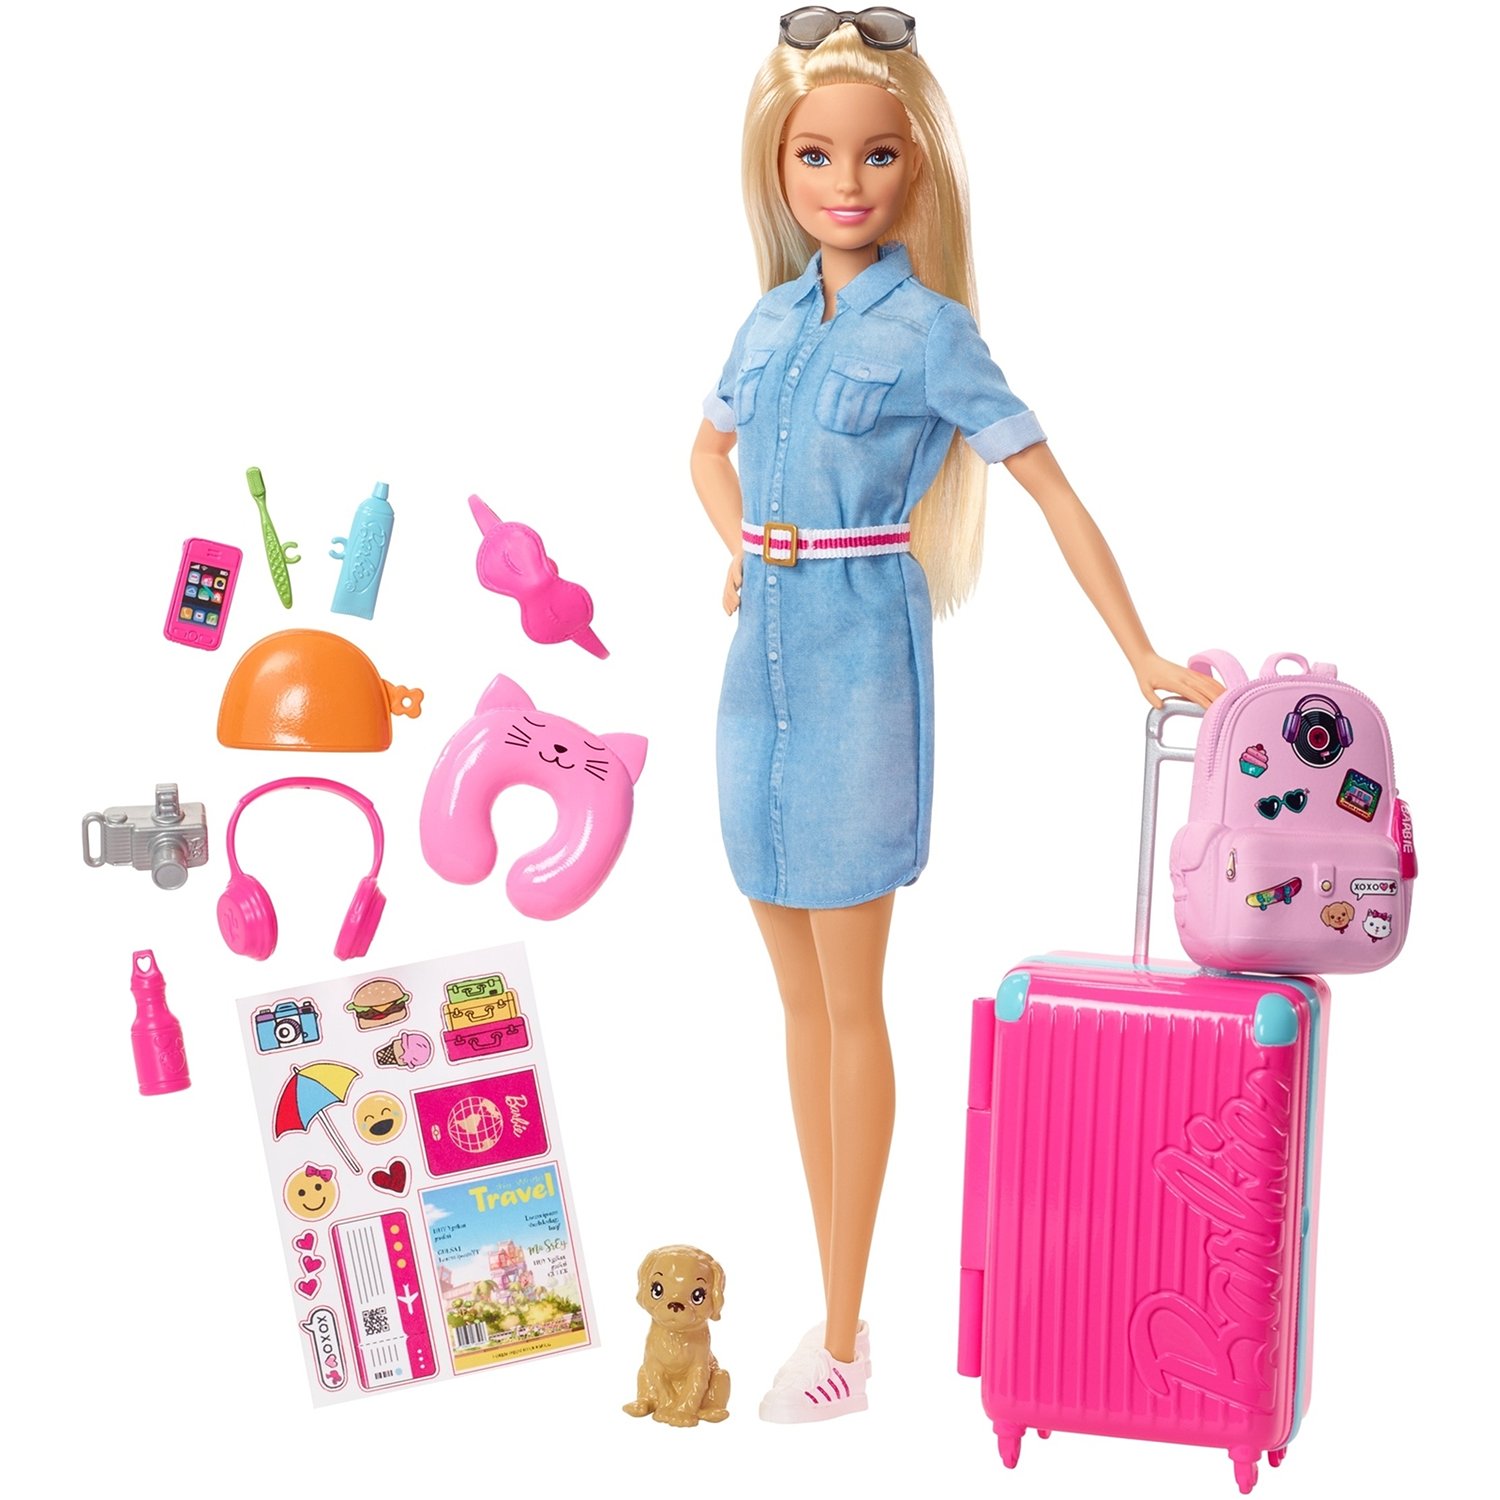 Кукла Barbie из серии Путешествие FWV25